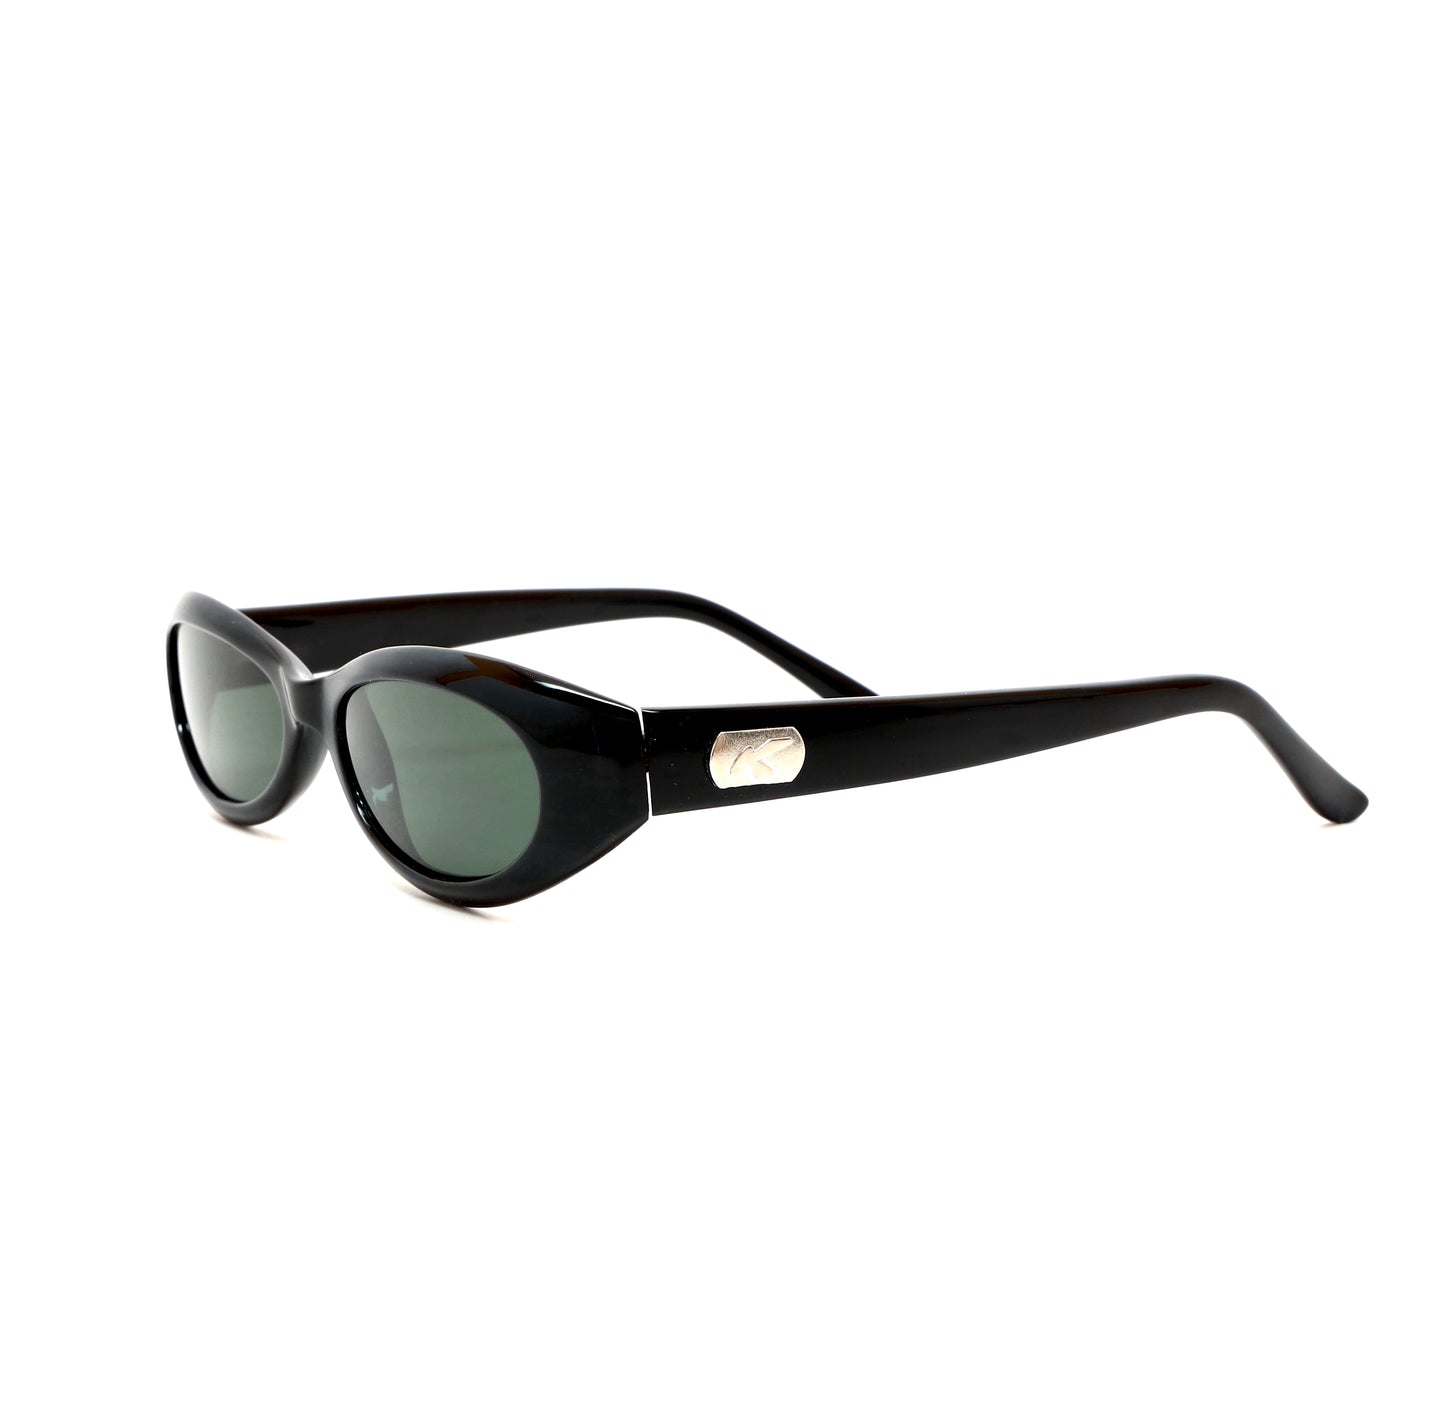 Vintage Small Size 90s Mod Verona Classic Oval Frame Sunglasses - Black